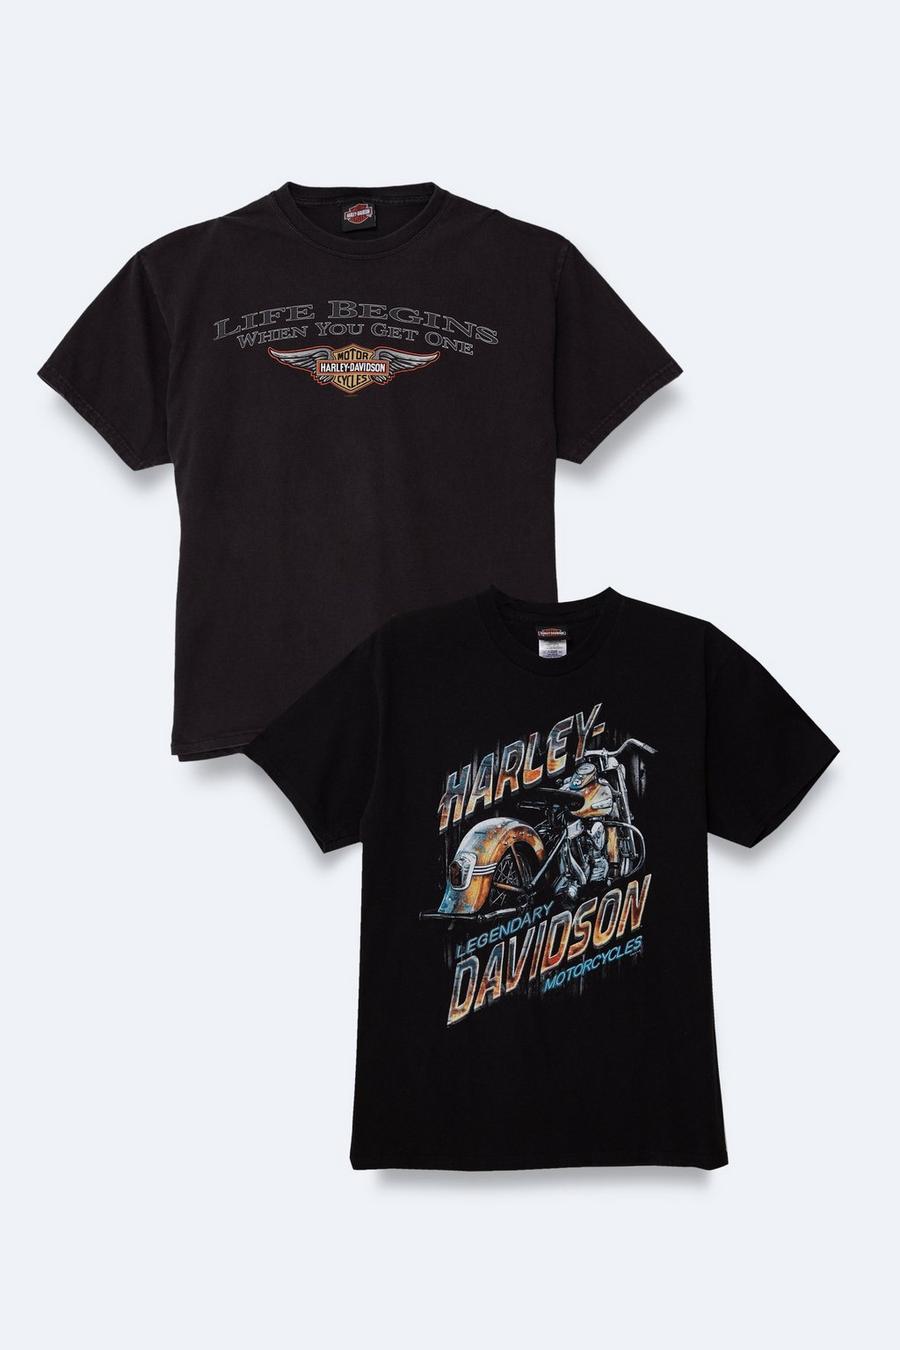 Vintage Short Sleeve Harley Davidson T-shirt